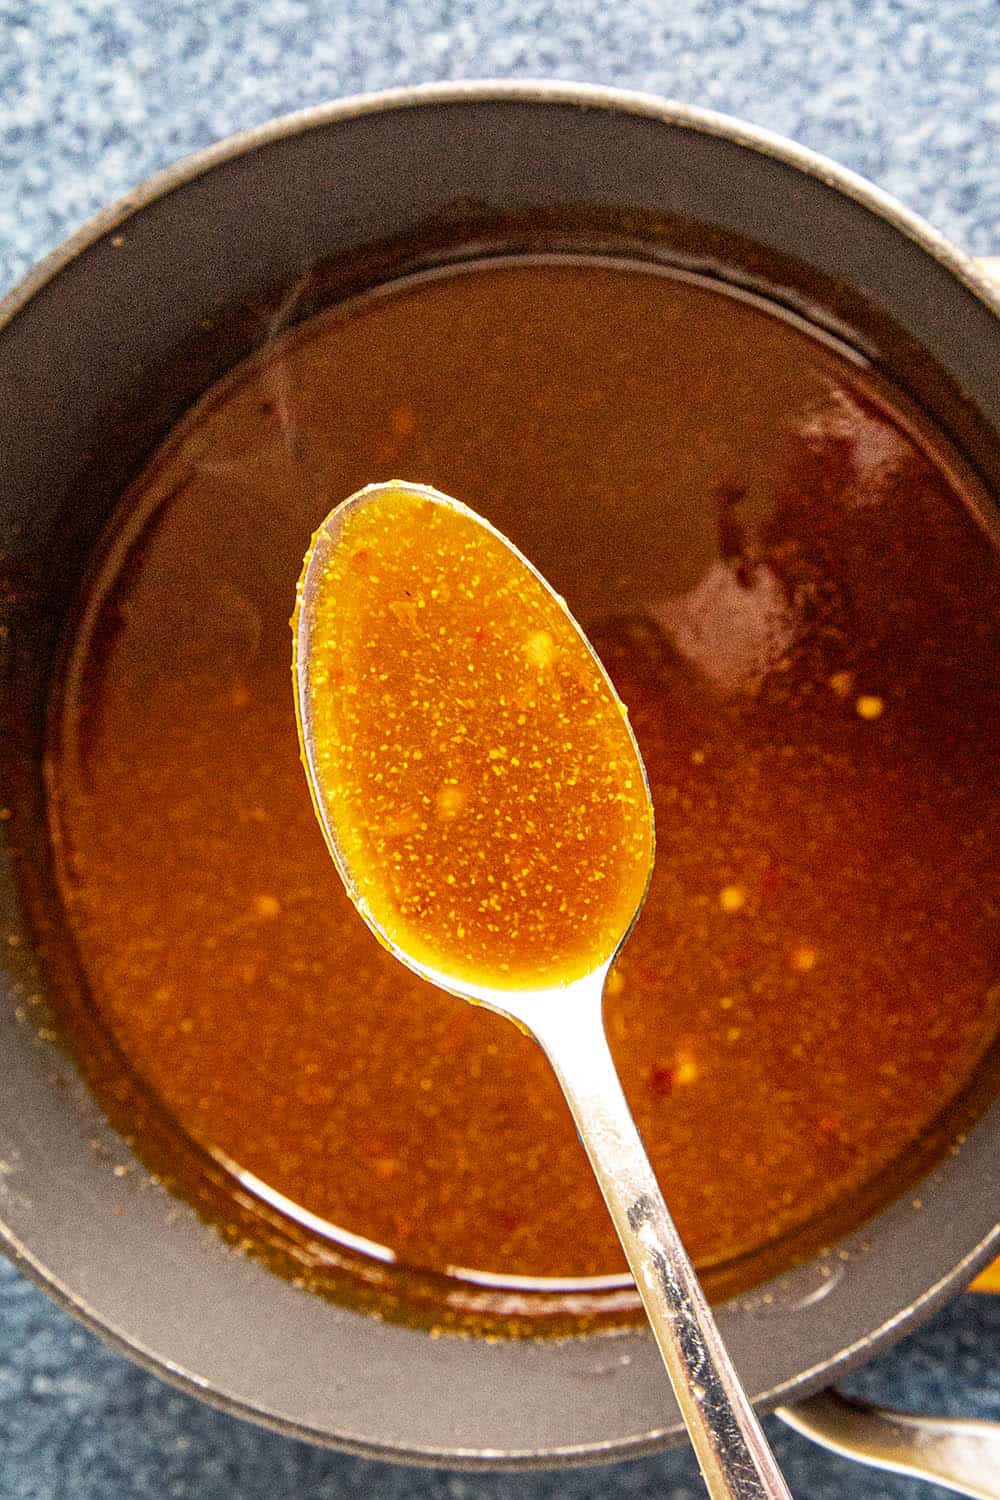 A spoonful of Szechuan Sauce from the pot